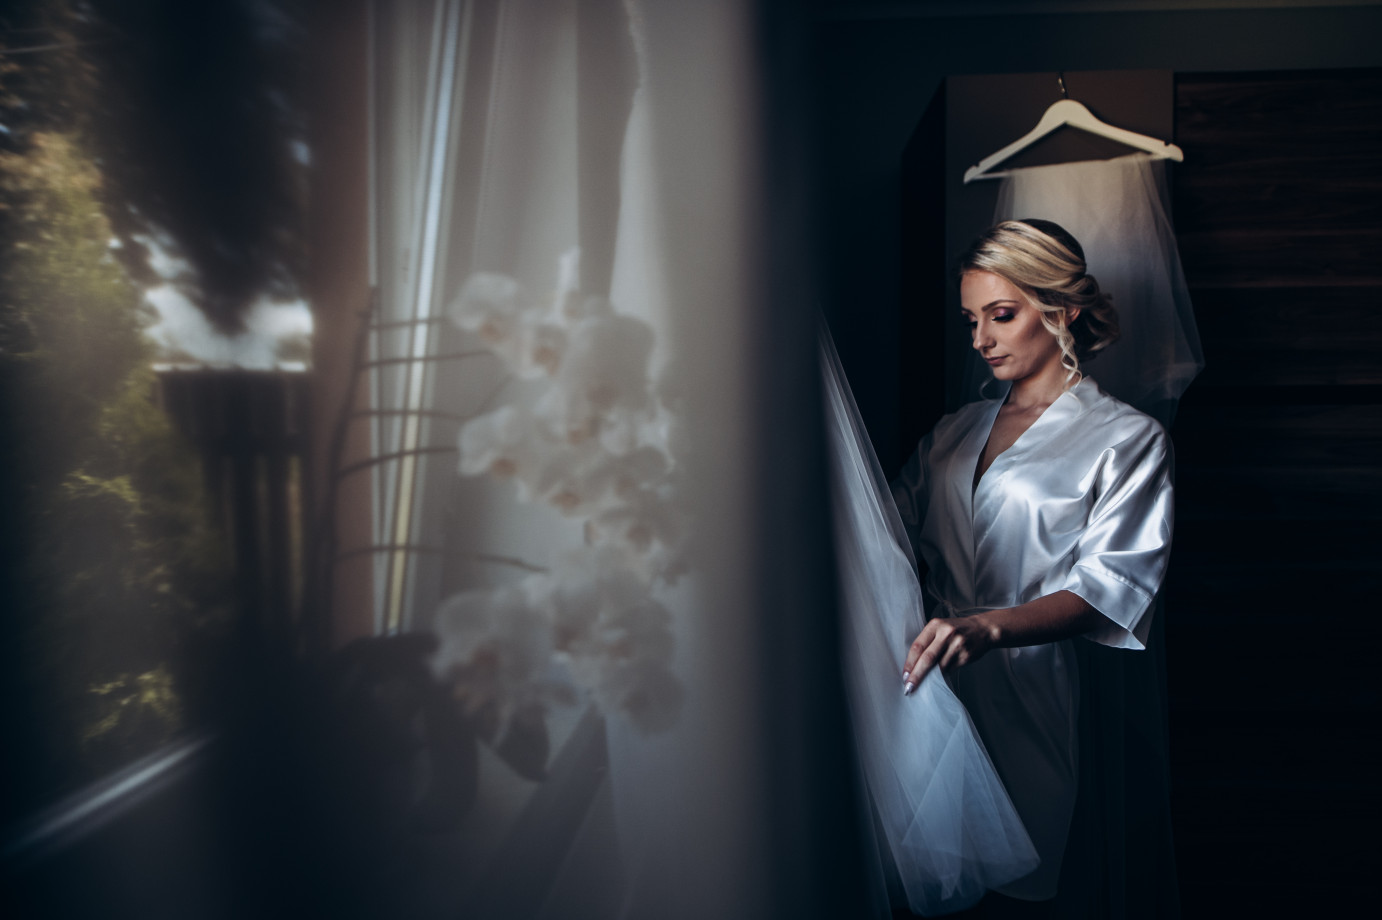 zdjęcia janow-lubelski fotograf robert-radzik-fotografia portfolio zdjecia slubne inspiracje wesele plener slubny sesja slubna